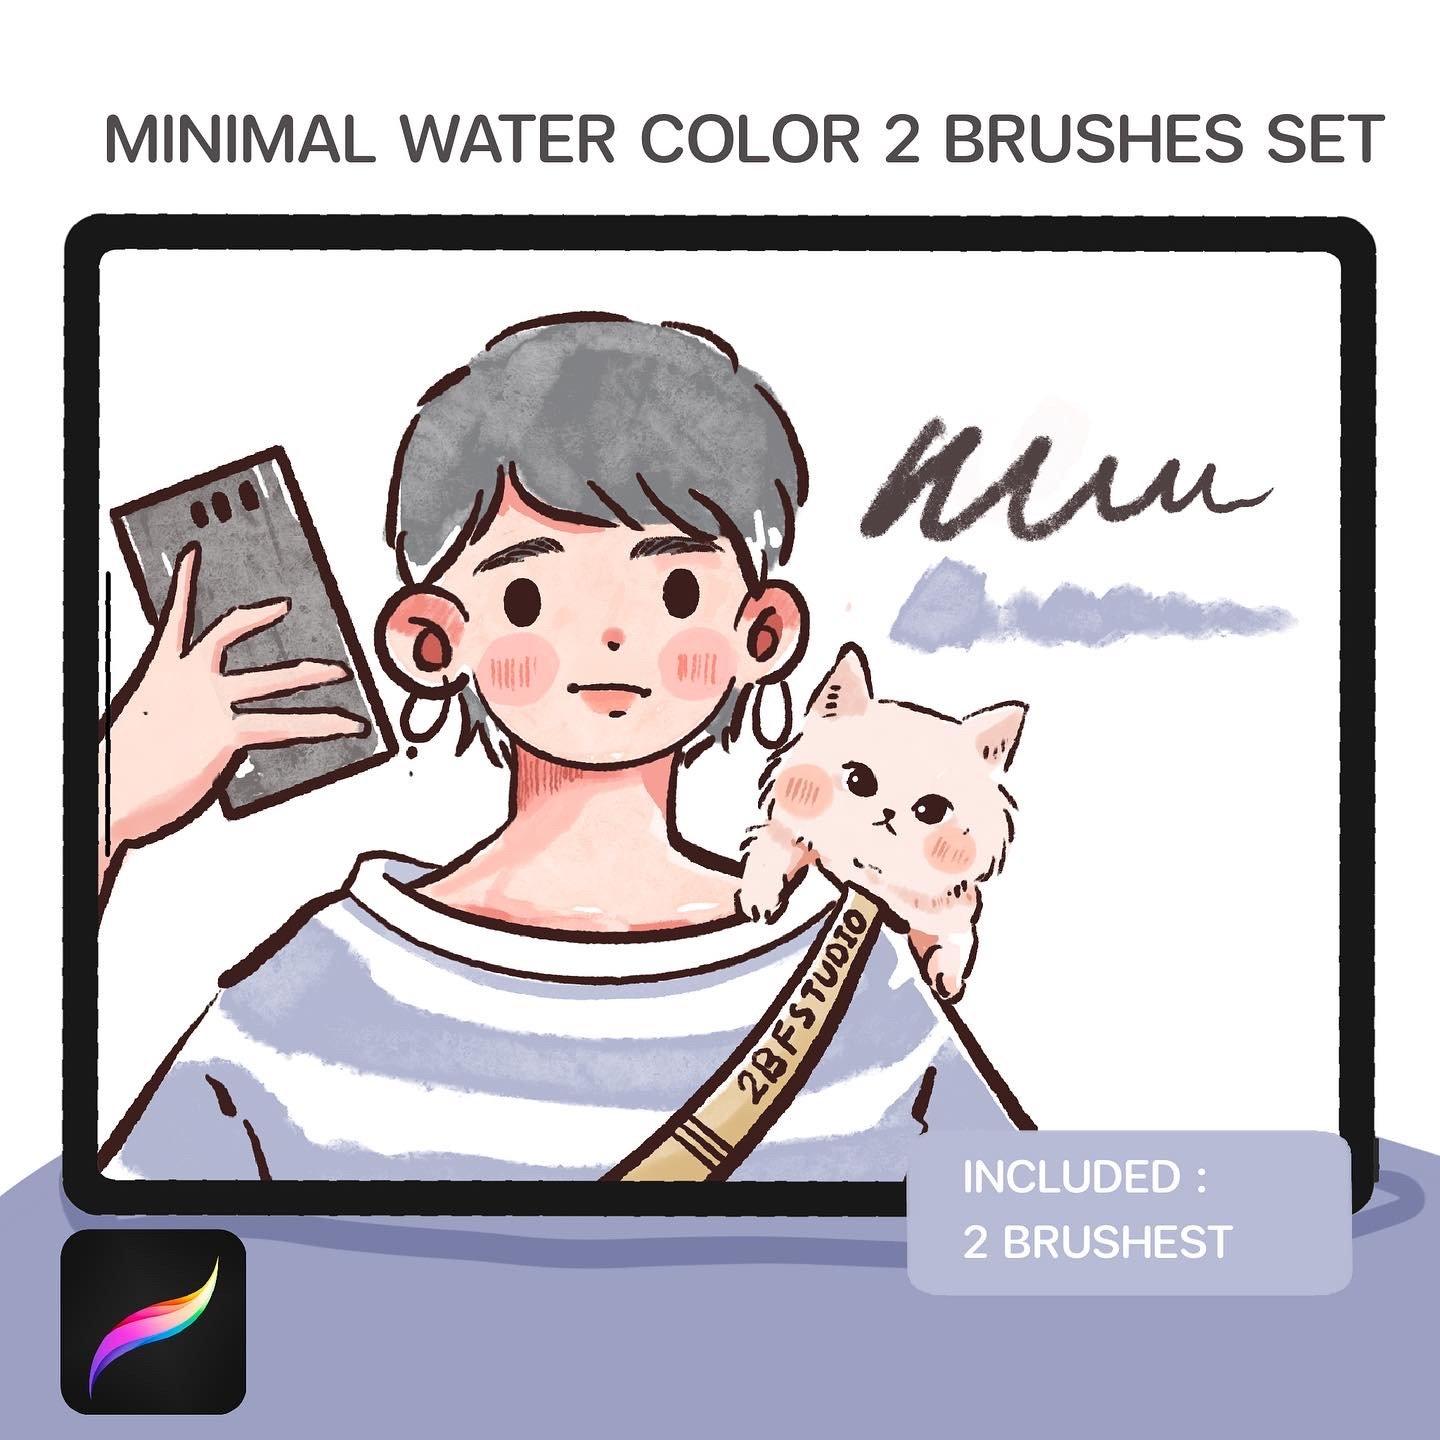 Minimal water color 2 brushes set